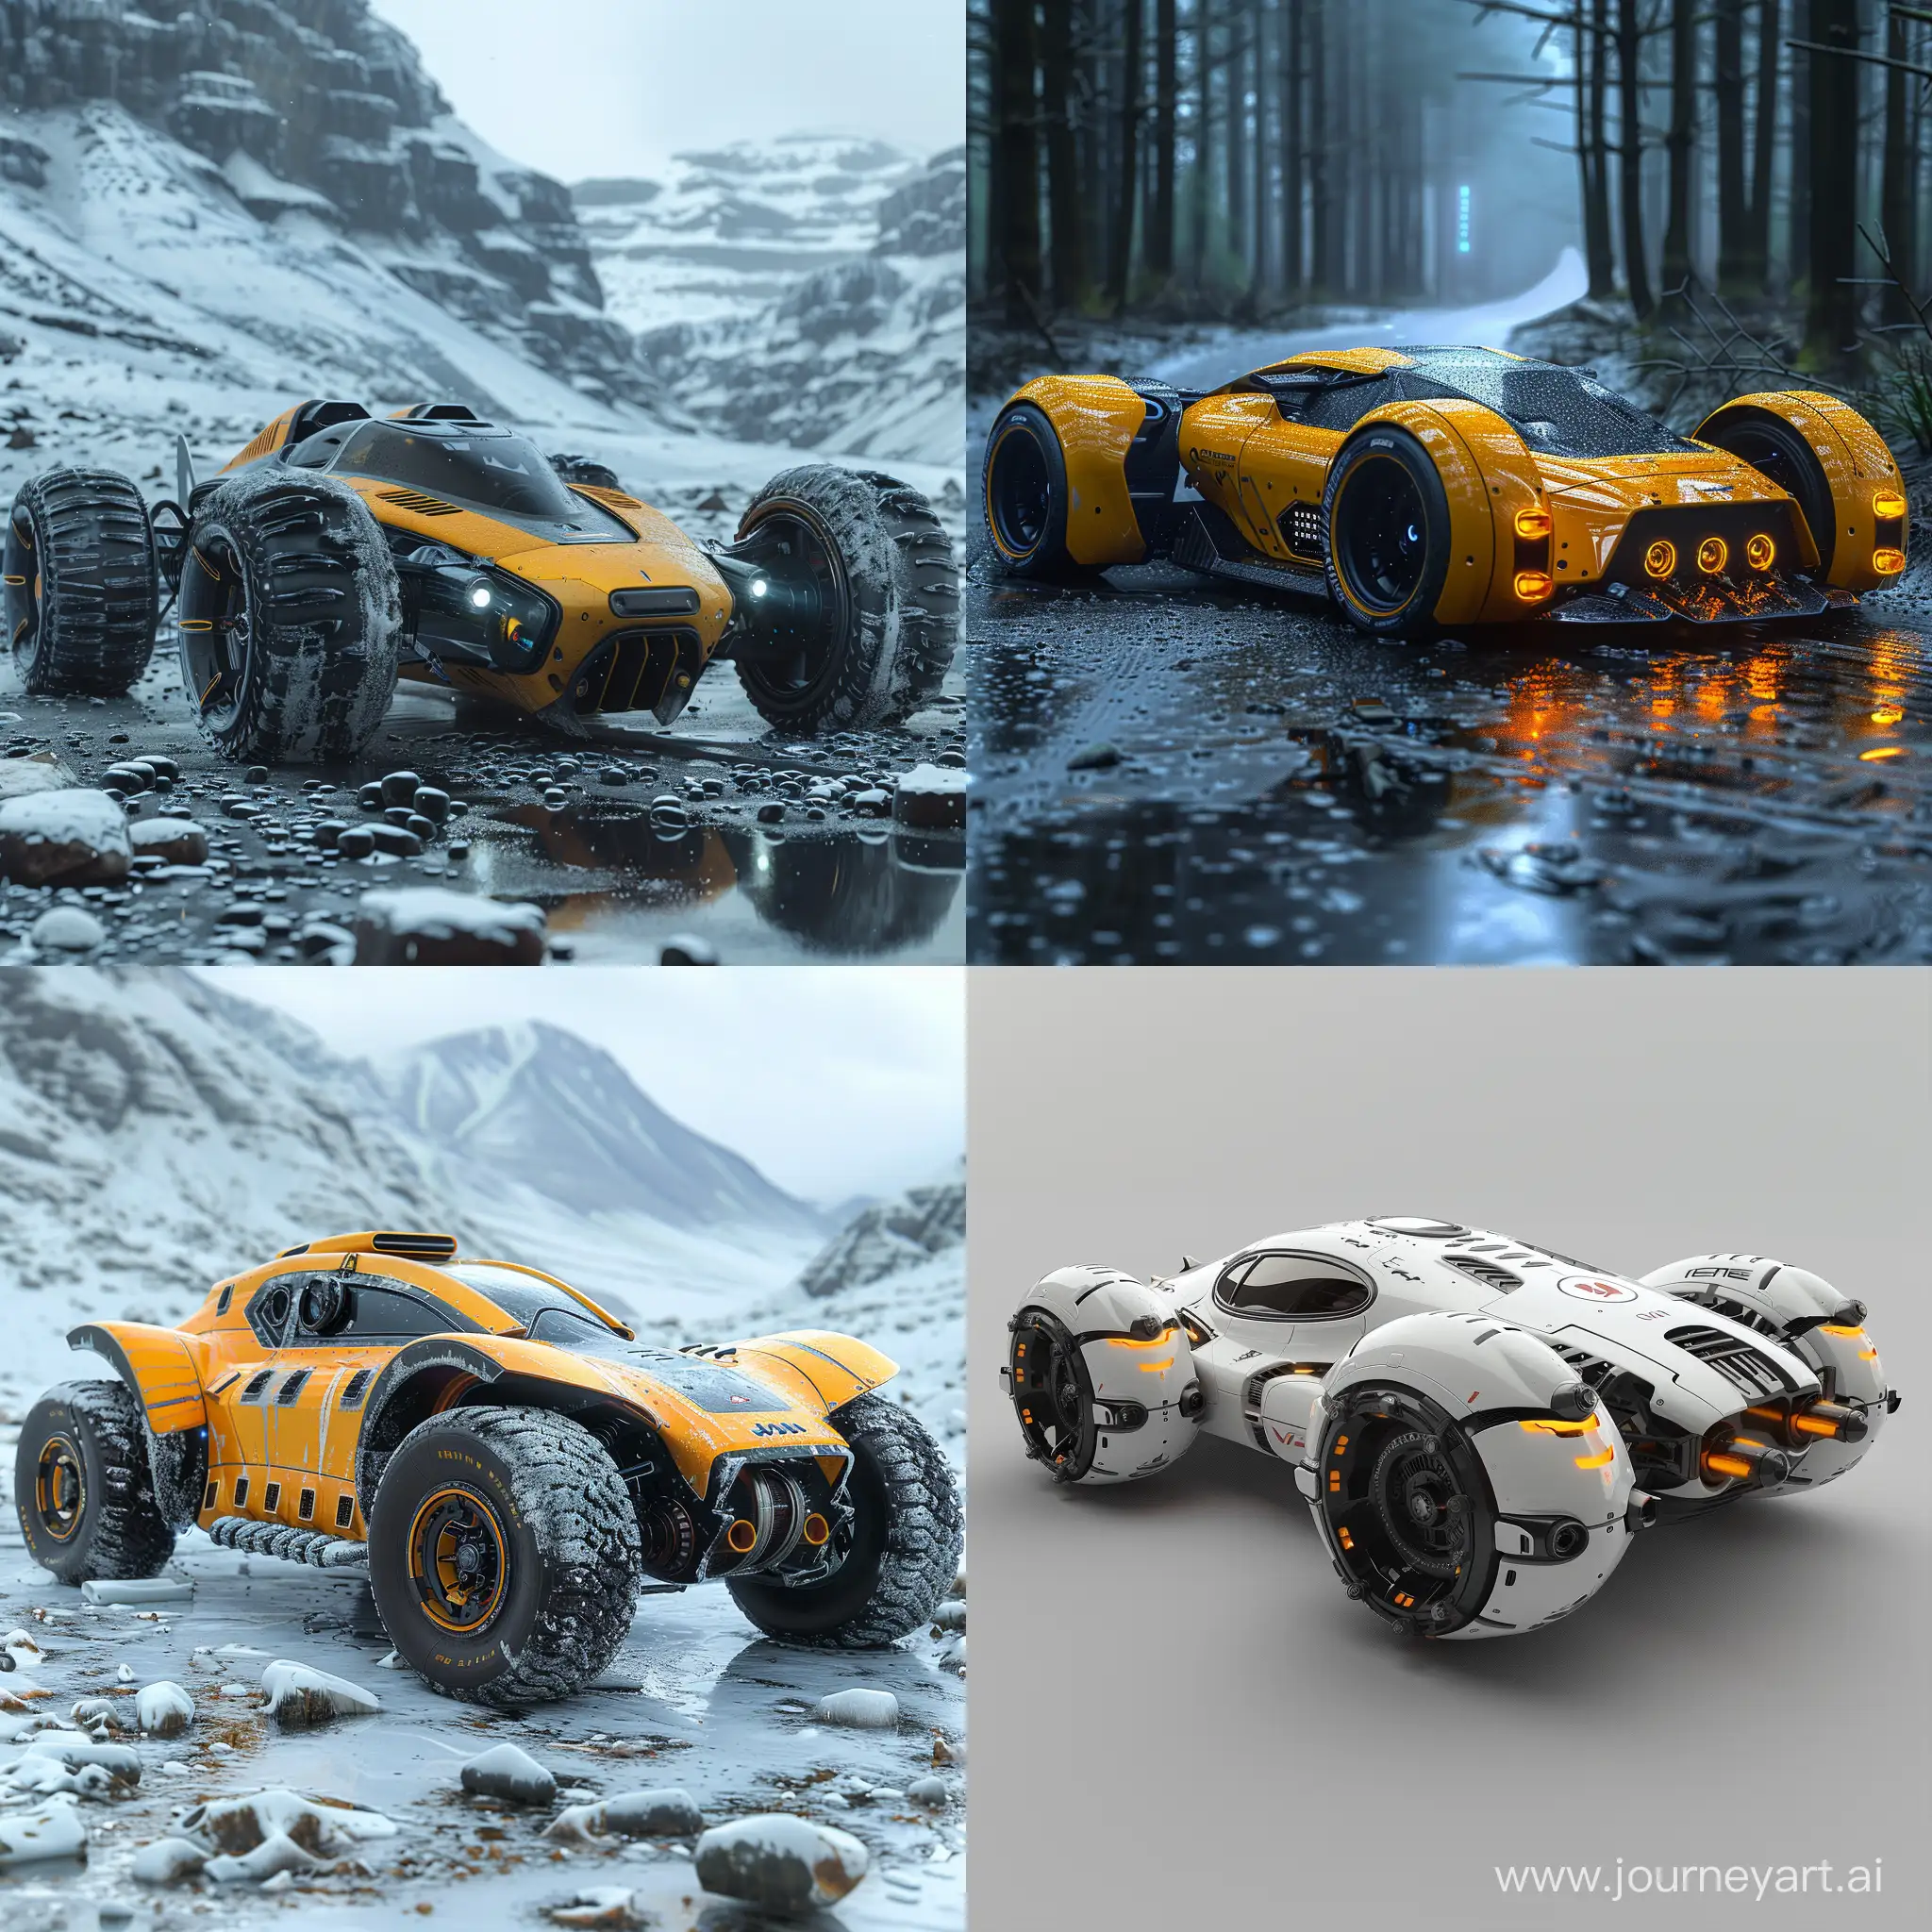 Futuristic sci-fi high-tech car, heavy-duty materials, octane render --stylize 1000 